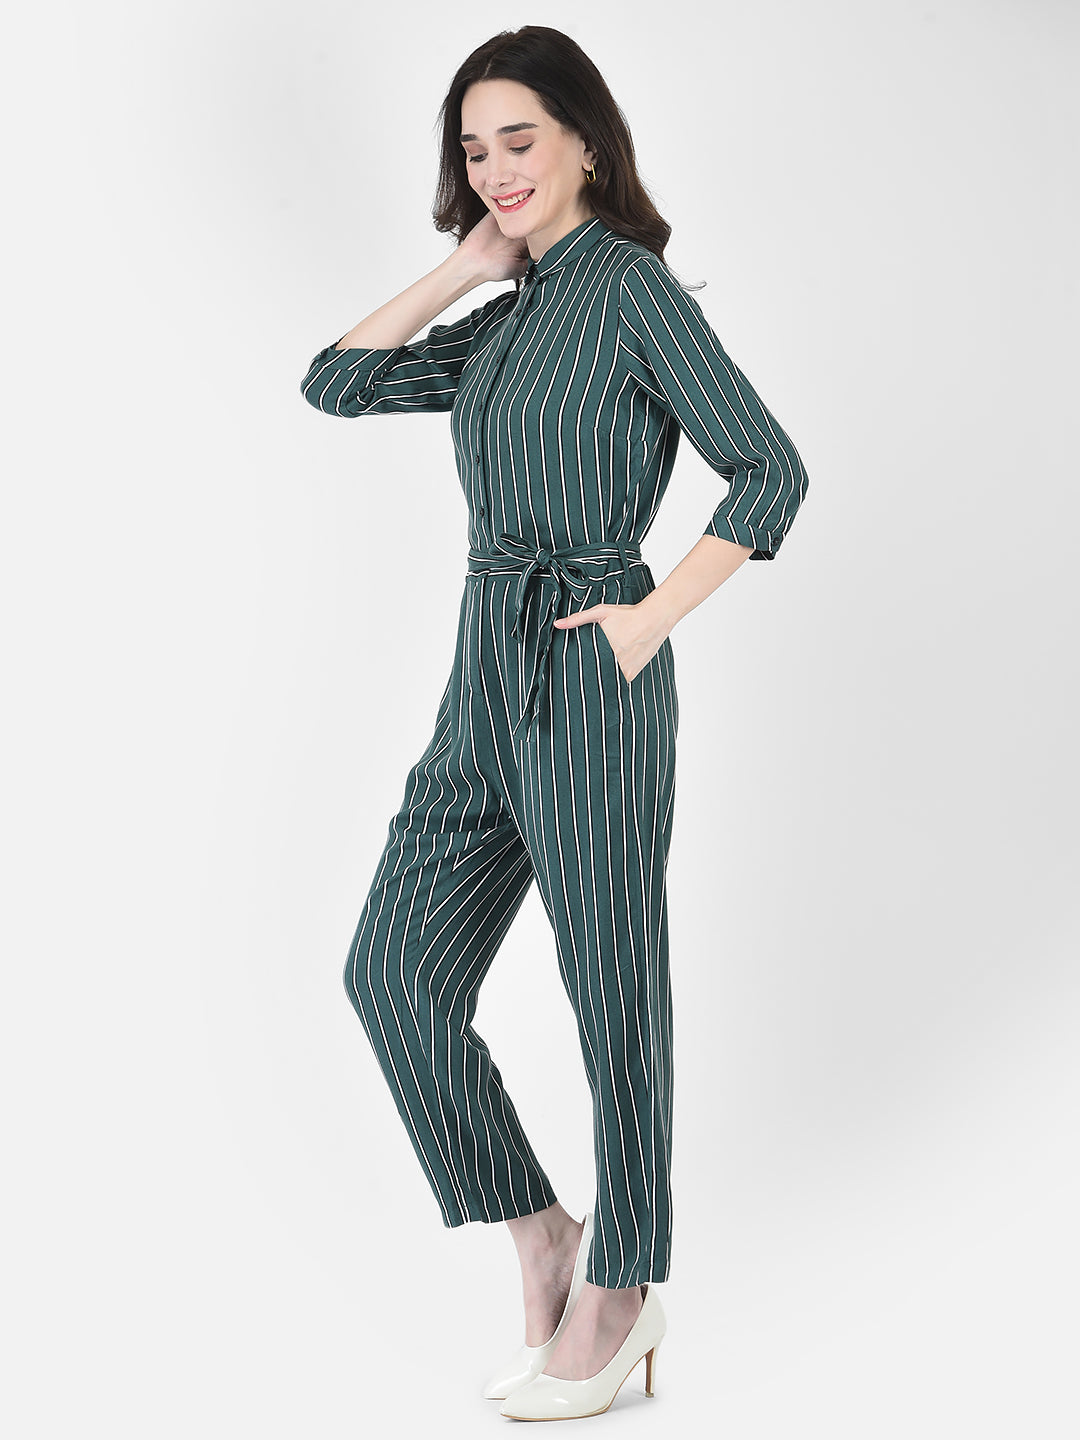 Viridian Green Striped Jumpsuit - Women Dungarees